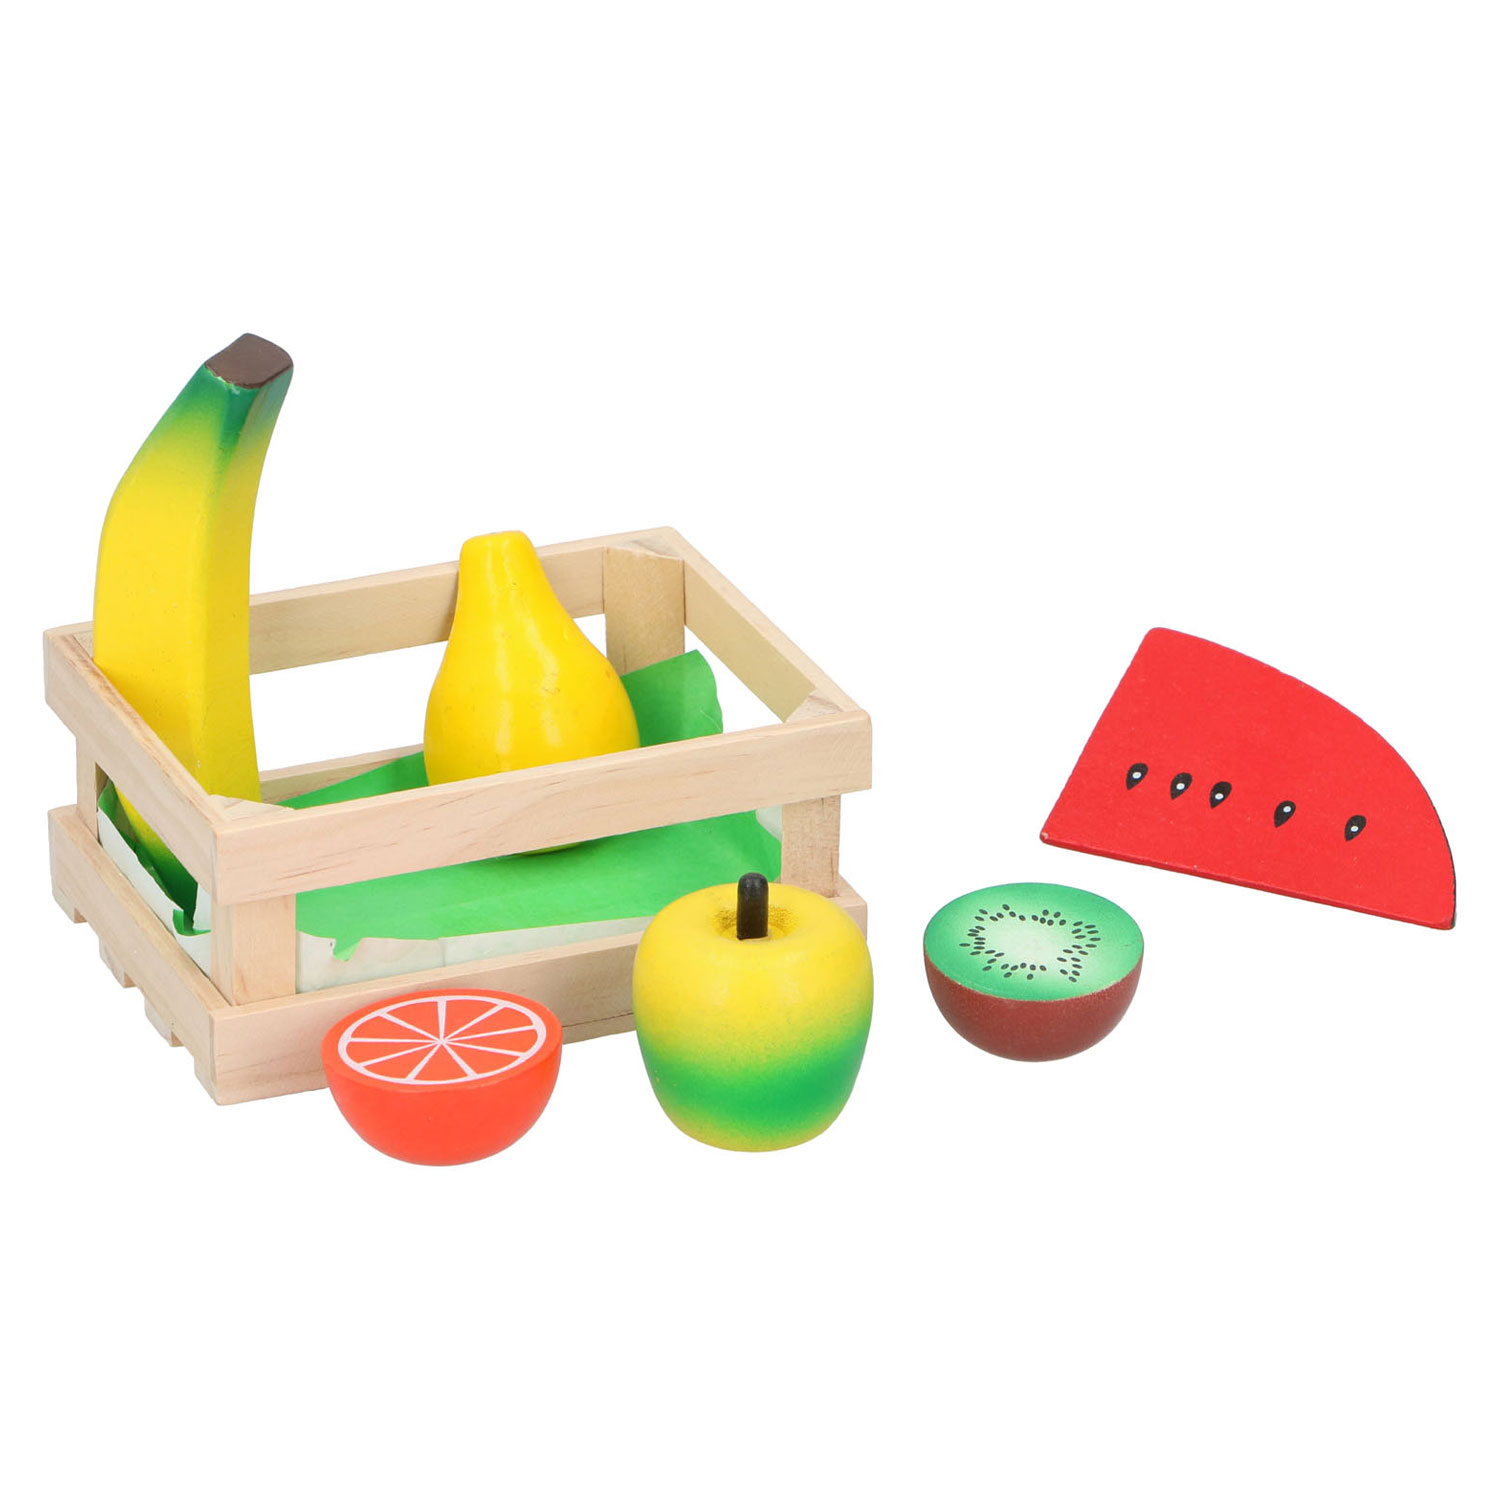 Watt Infrarood grijs Houten Kistje met Fruit | Thimble Toys